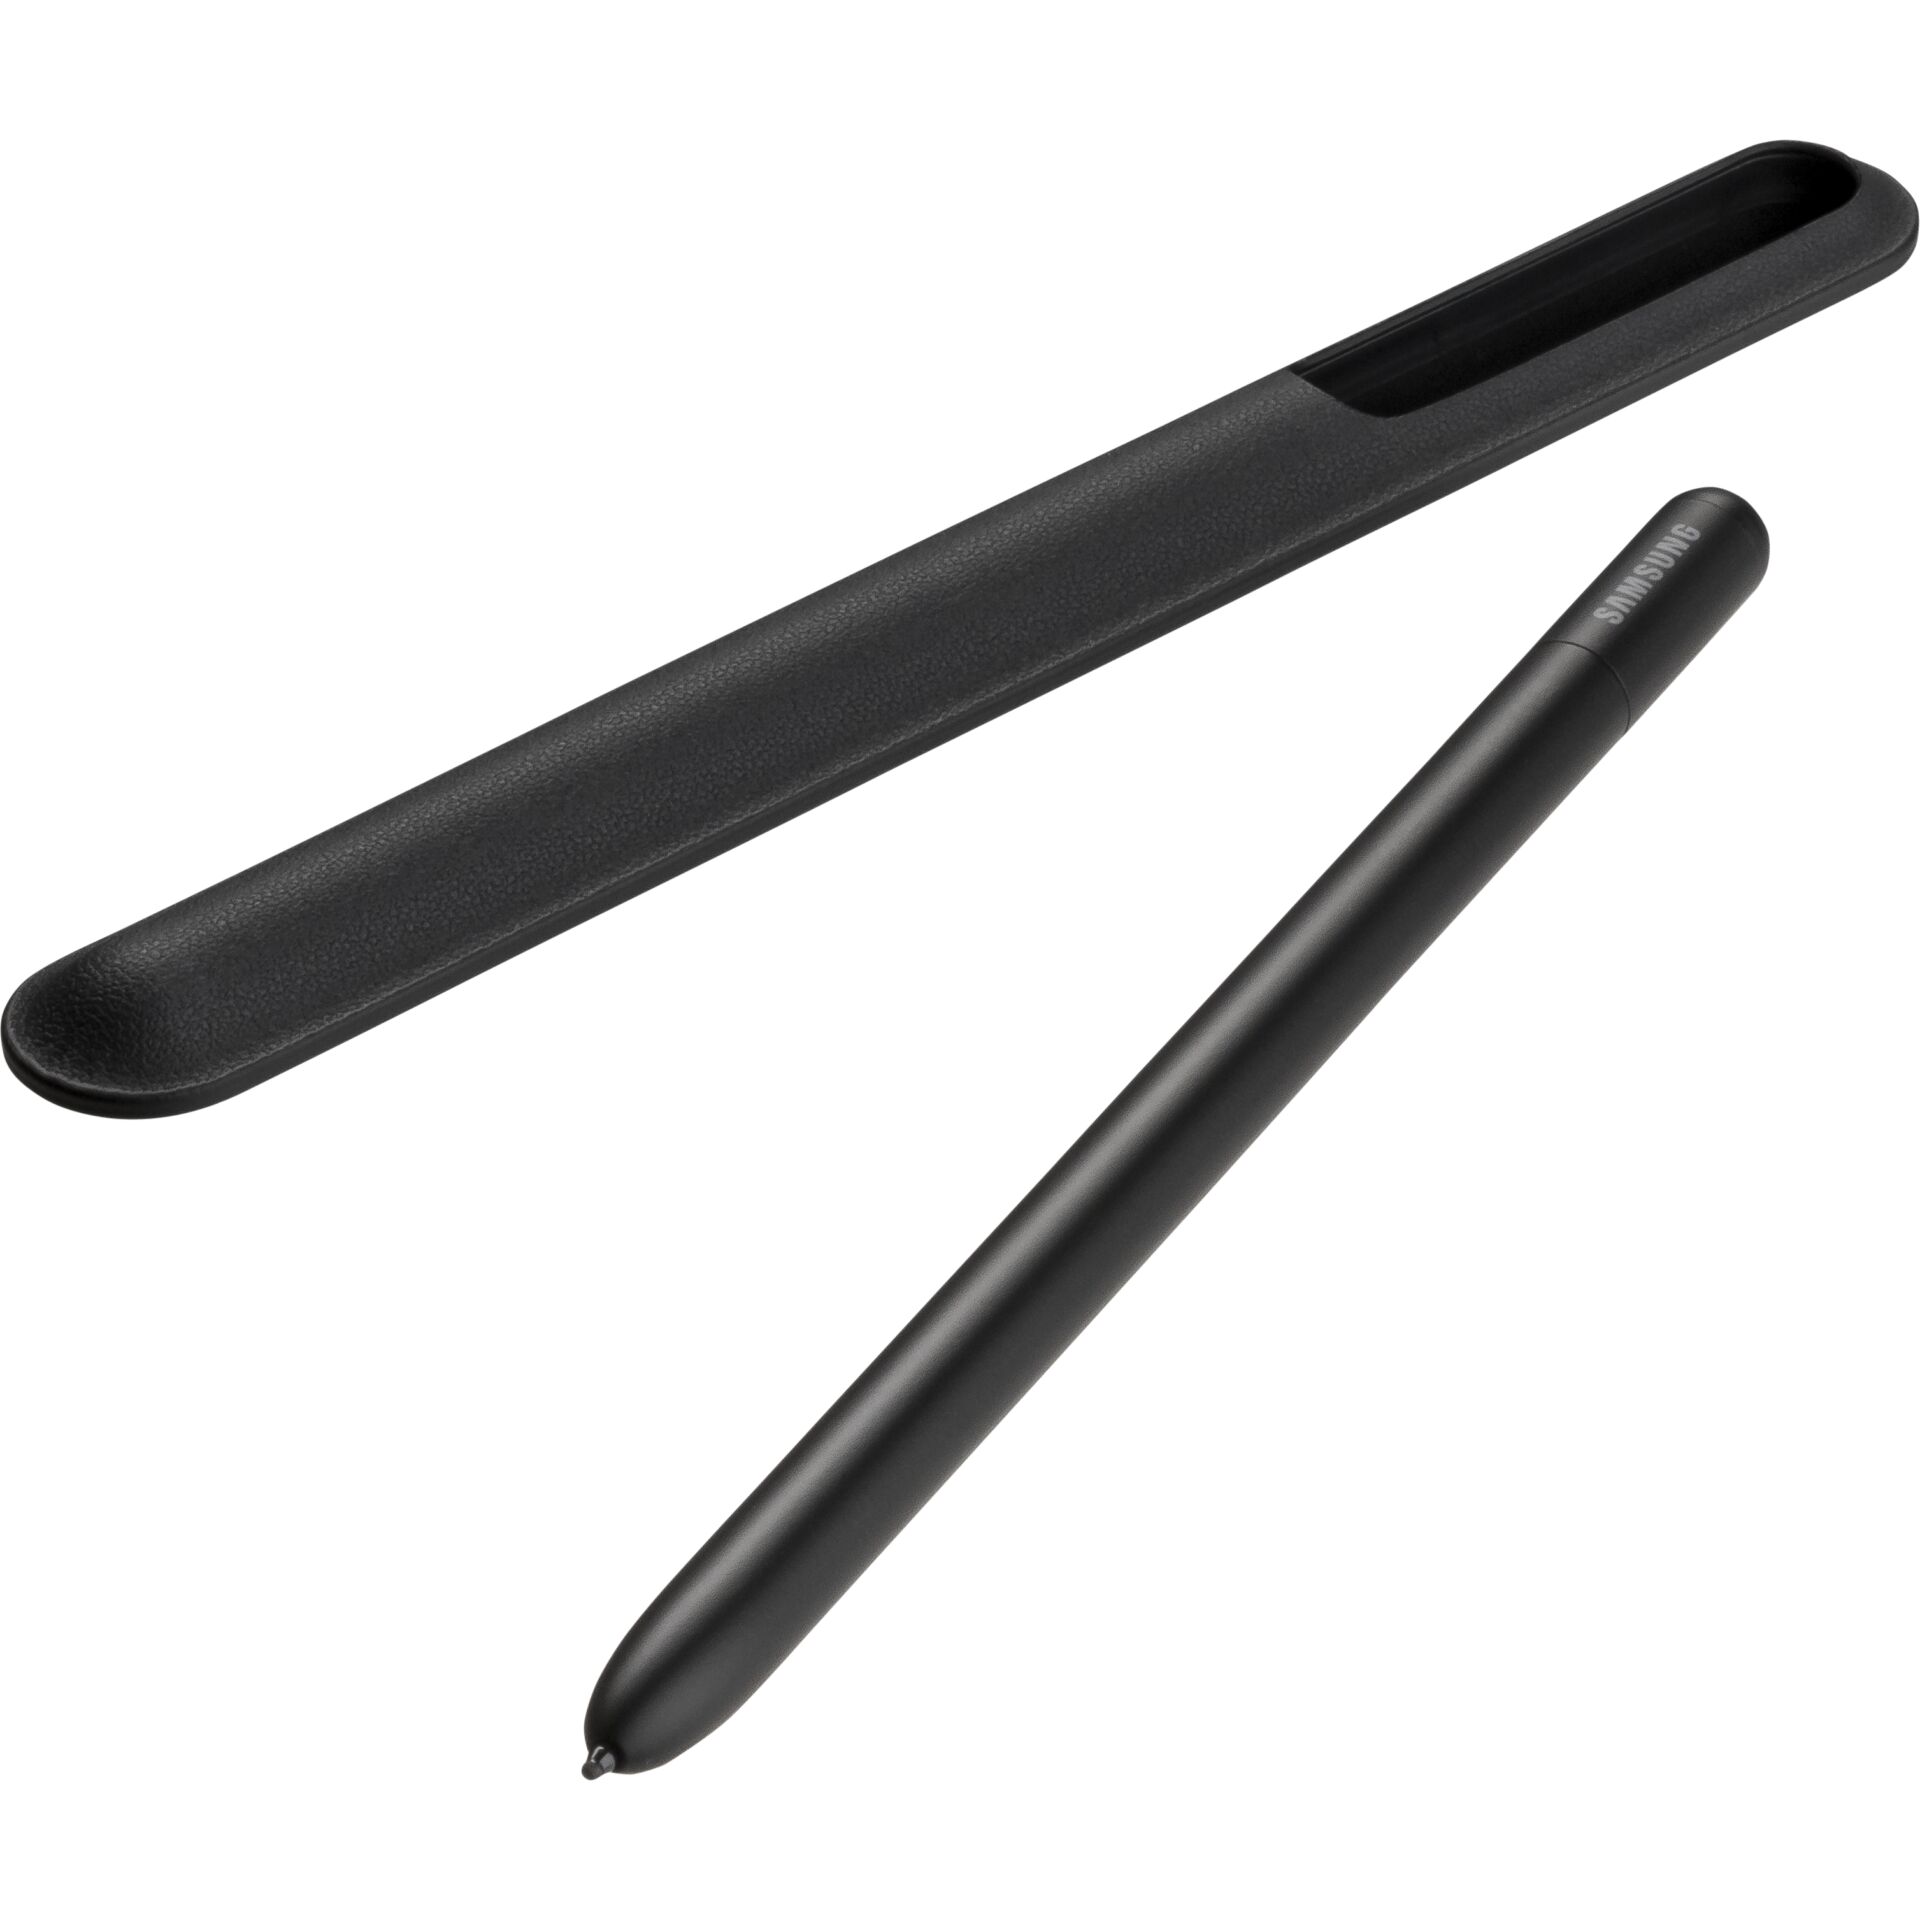 Samsung S Pen Pro Sort Stylus